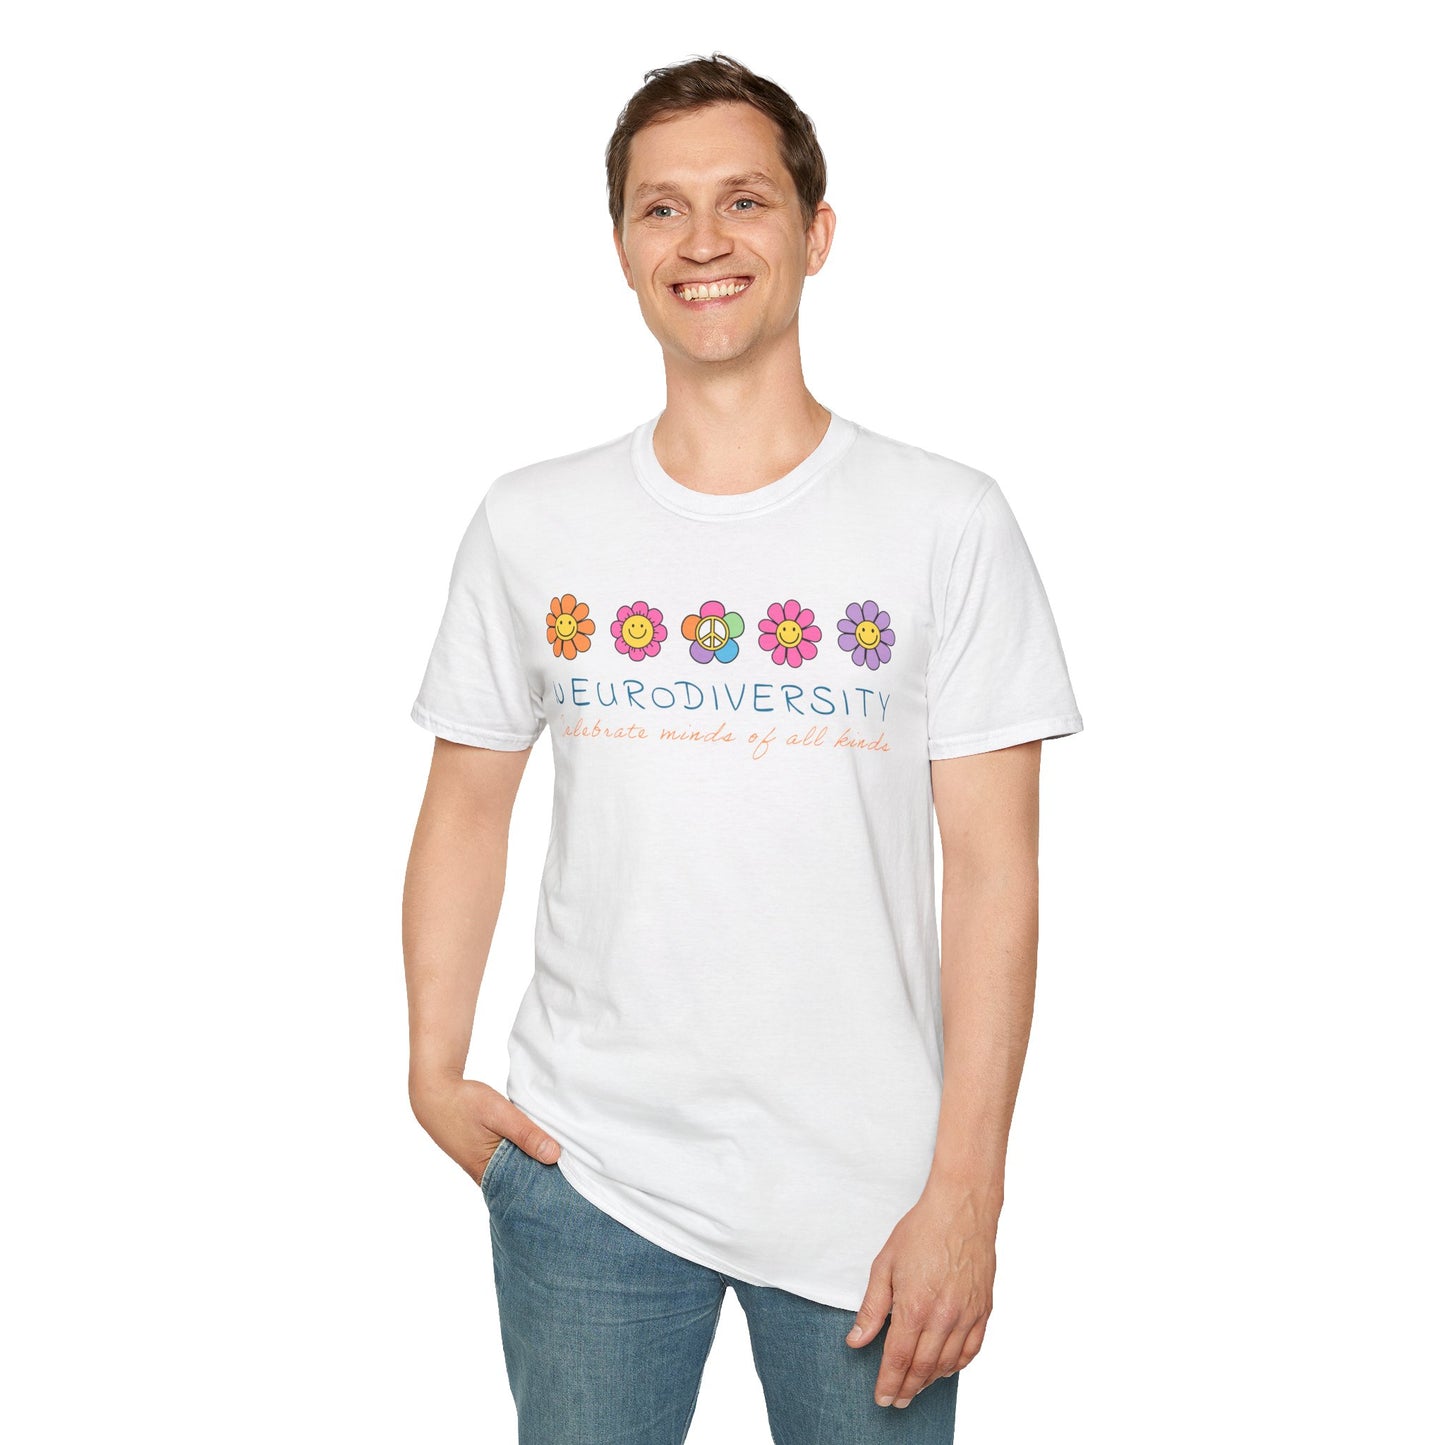 "Neurodiversity Celebrate minds of all kinds" Unisex Softstyle T-Shirt